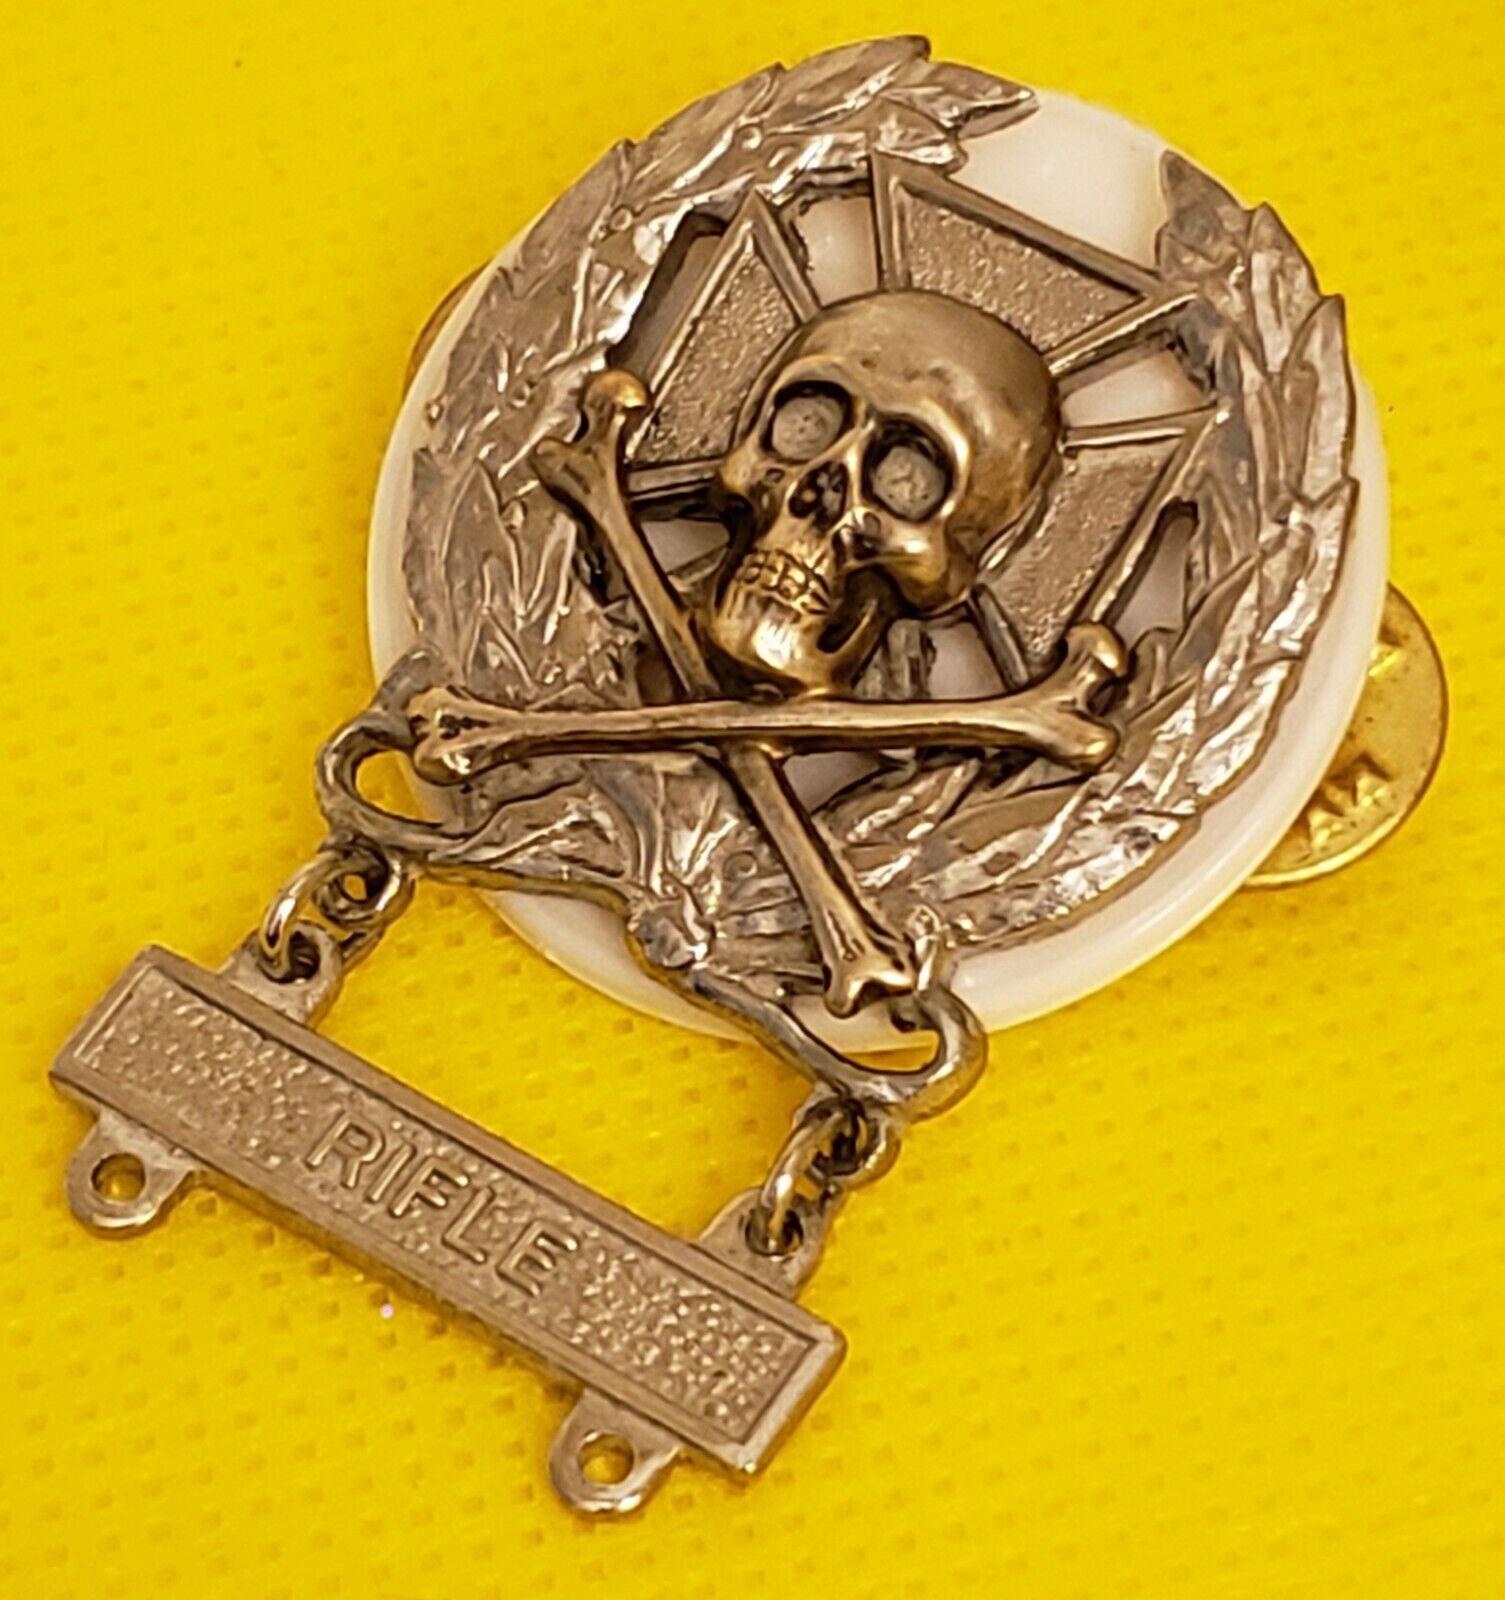 Expert Sniper Skull Badge Pin Rifle US Army Medal Military Insignia Marksman